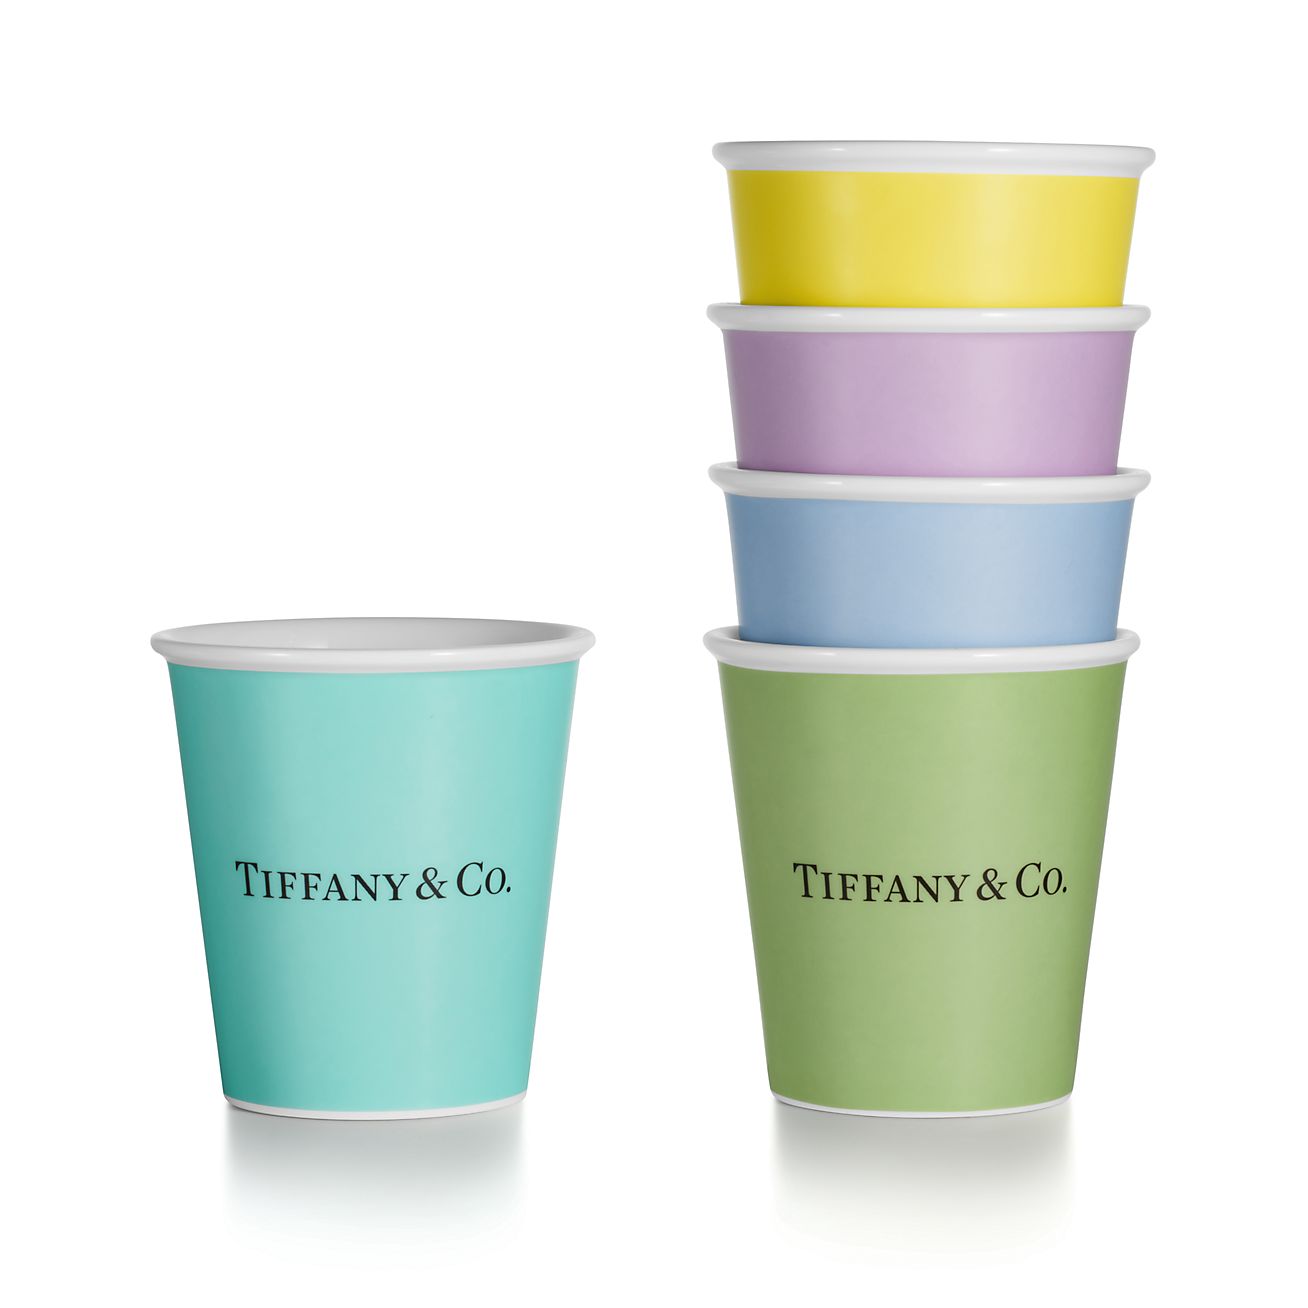 https://media.tiffany.com/is/image/Tiffany/EcomItemL2/everyday-objectstiffany-coffee-cups-71364496_1065510_ED.jpg